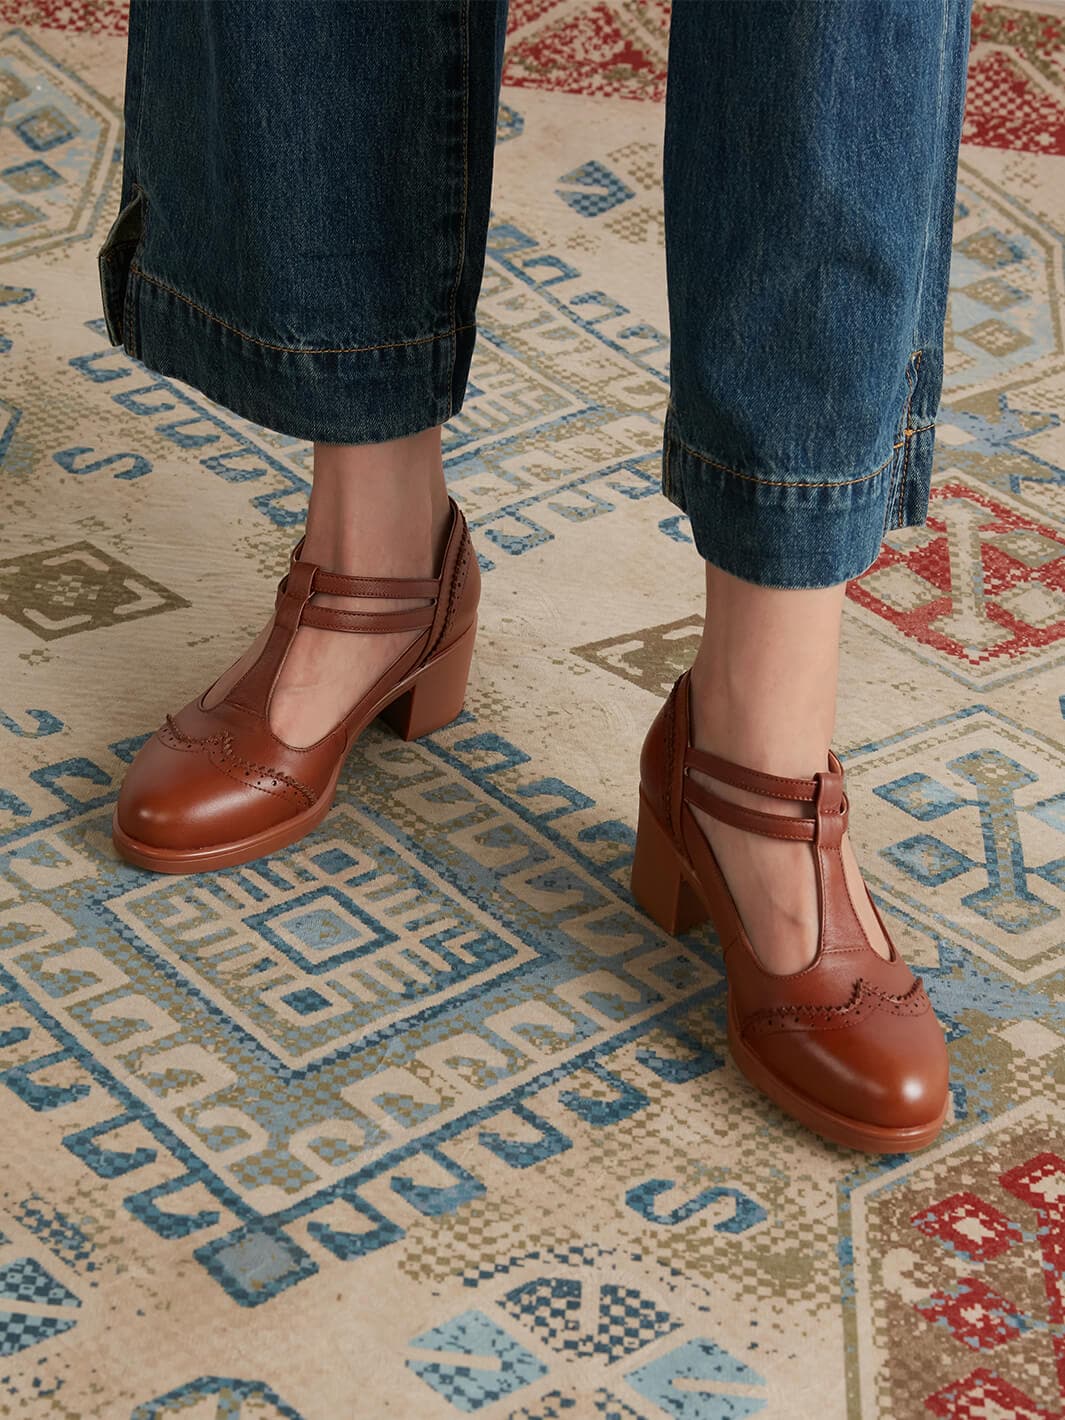 Classic T-Strap Leather Shoes - Handmade, Vegan Leather, 5 cm Heel